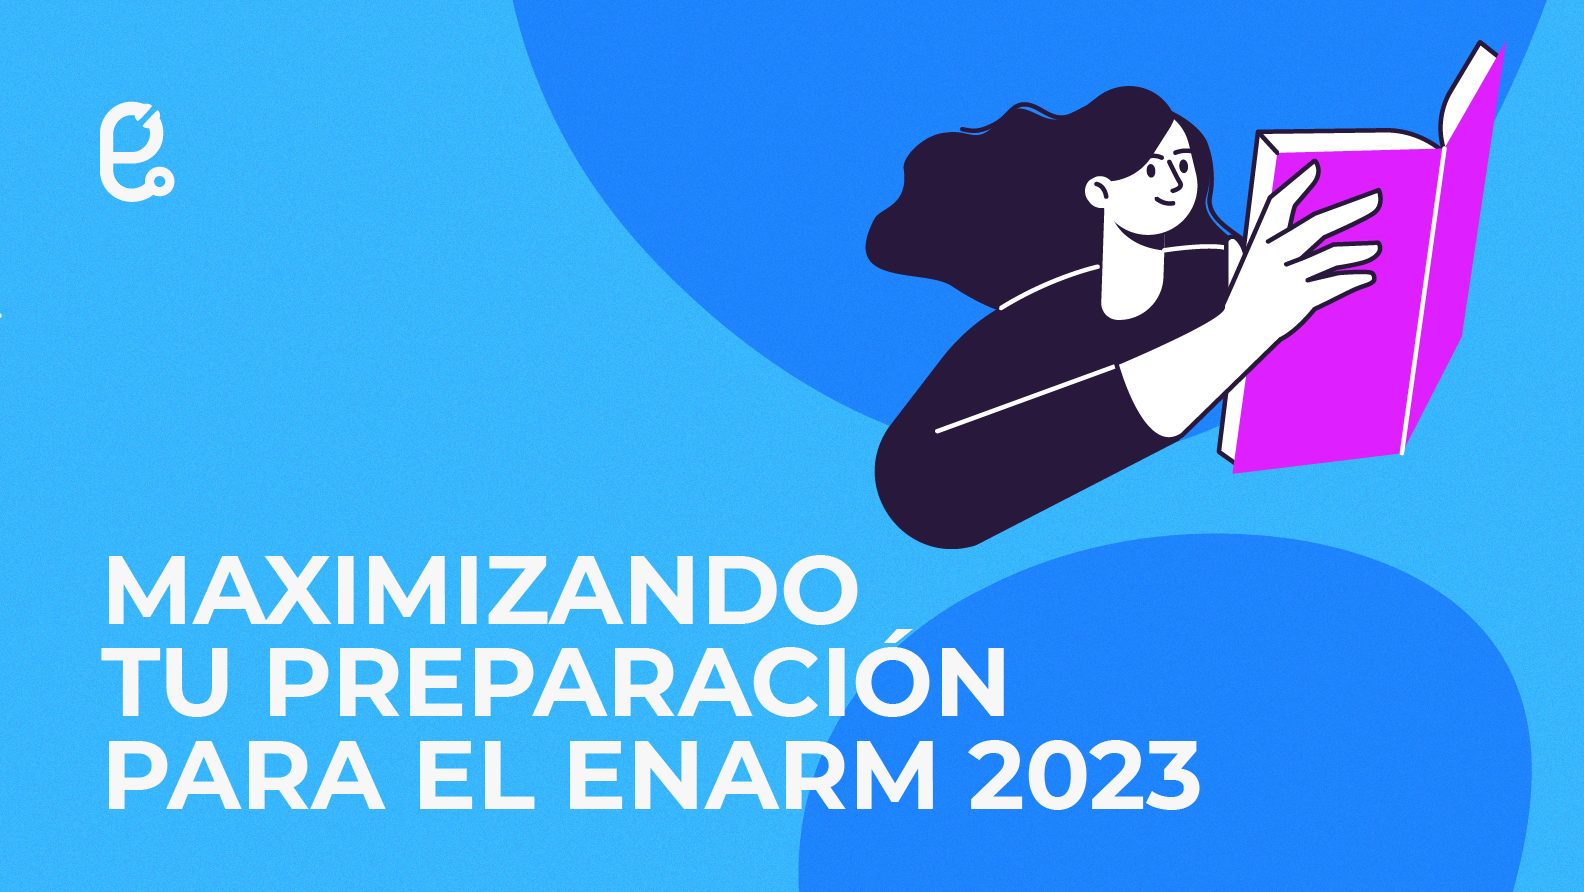 Maximizando preparación ENARM 2023